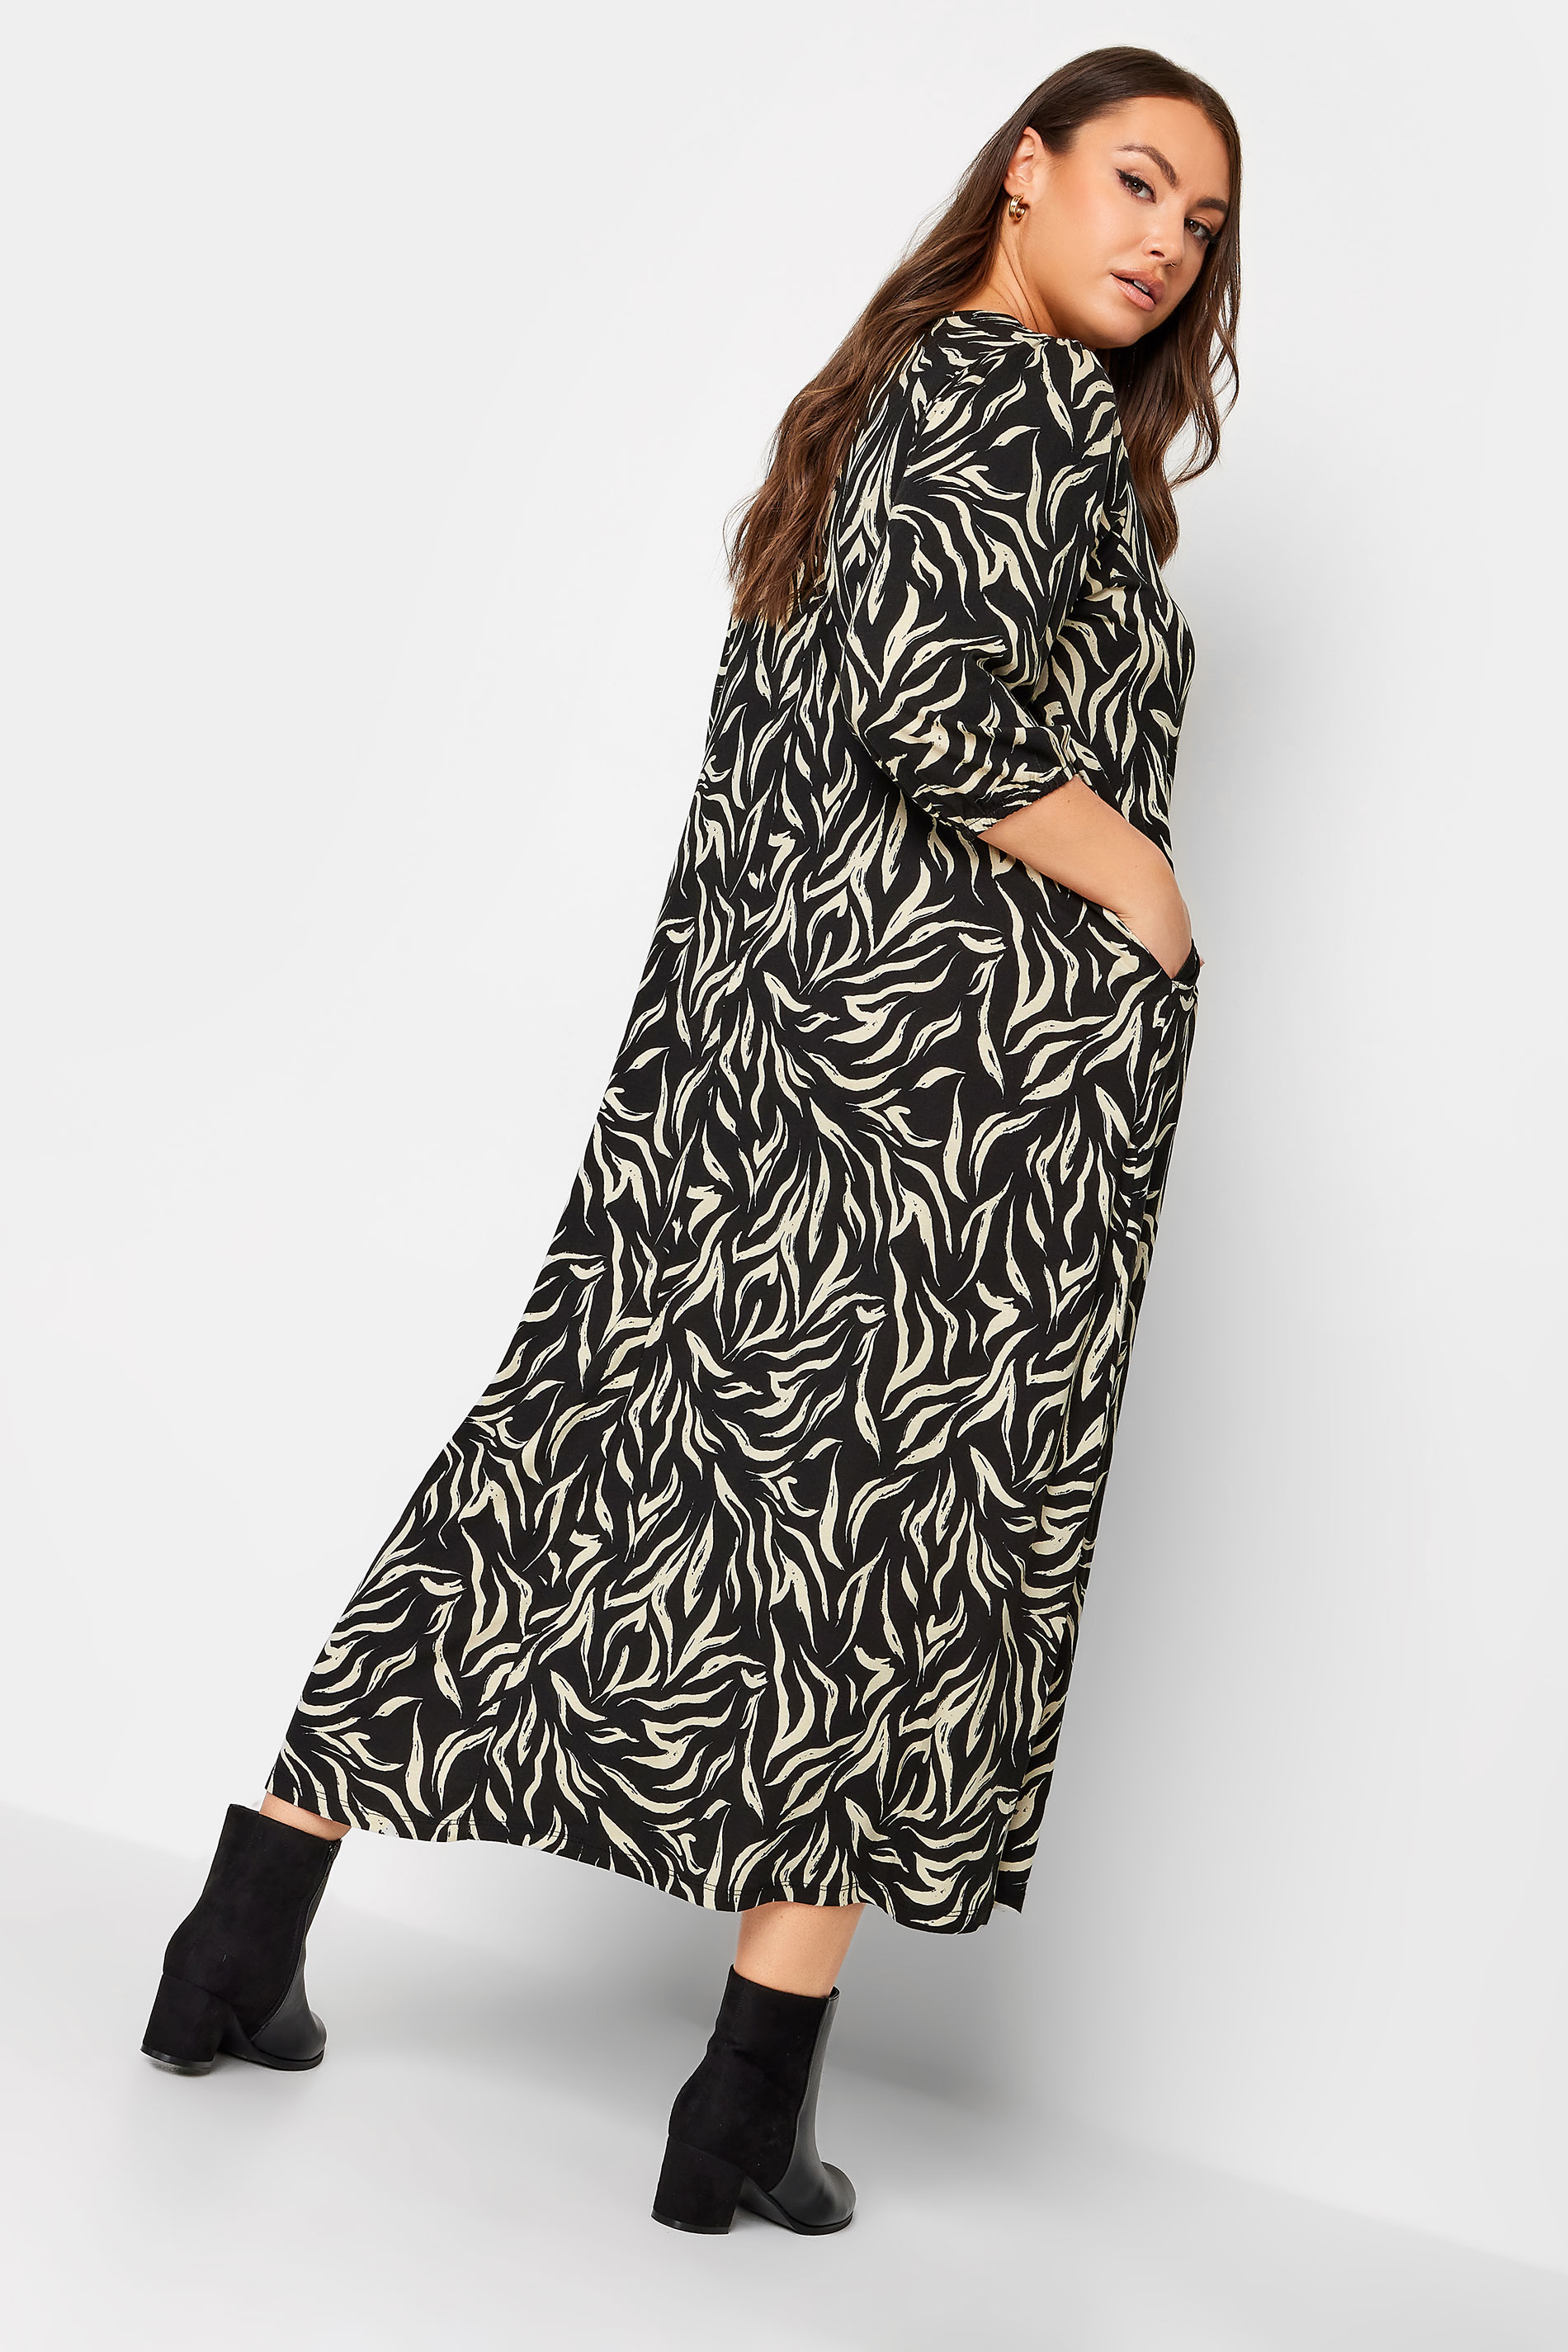 Plus Size Black Zebra Maxi Dress | Yours